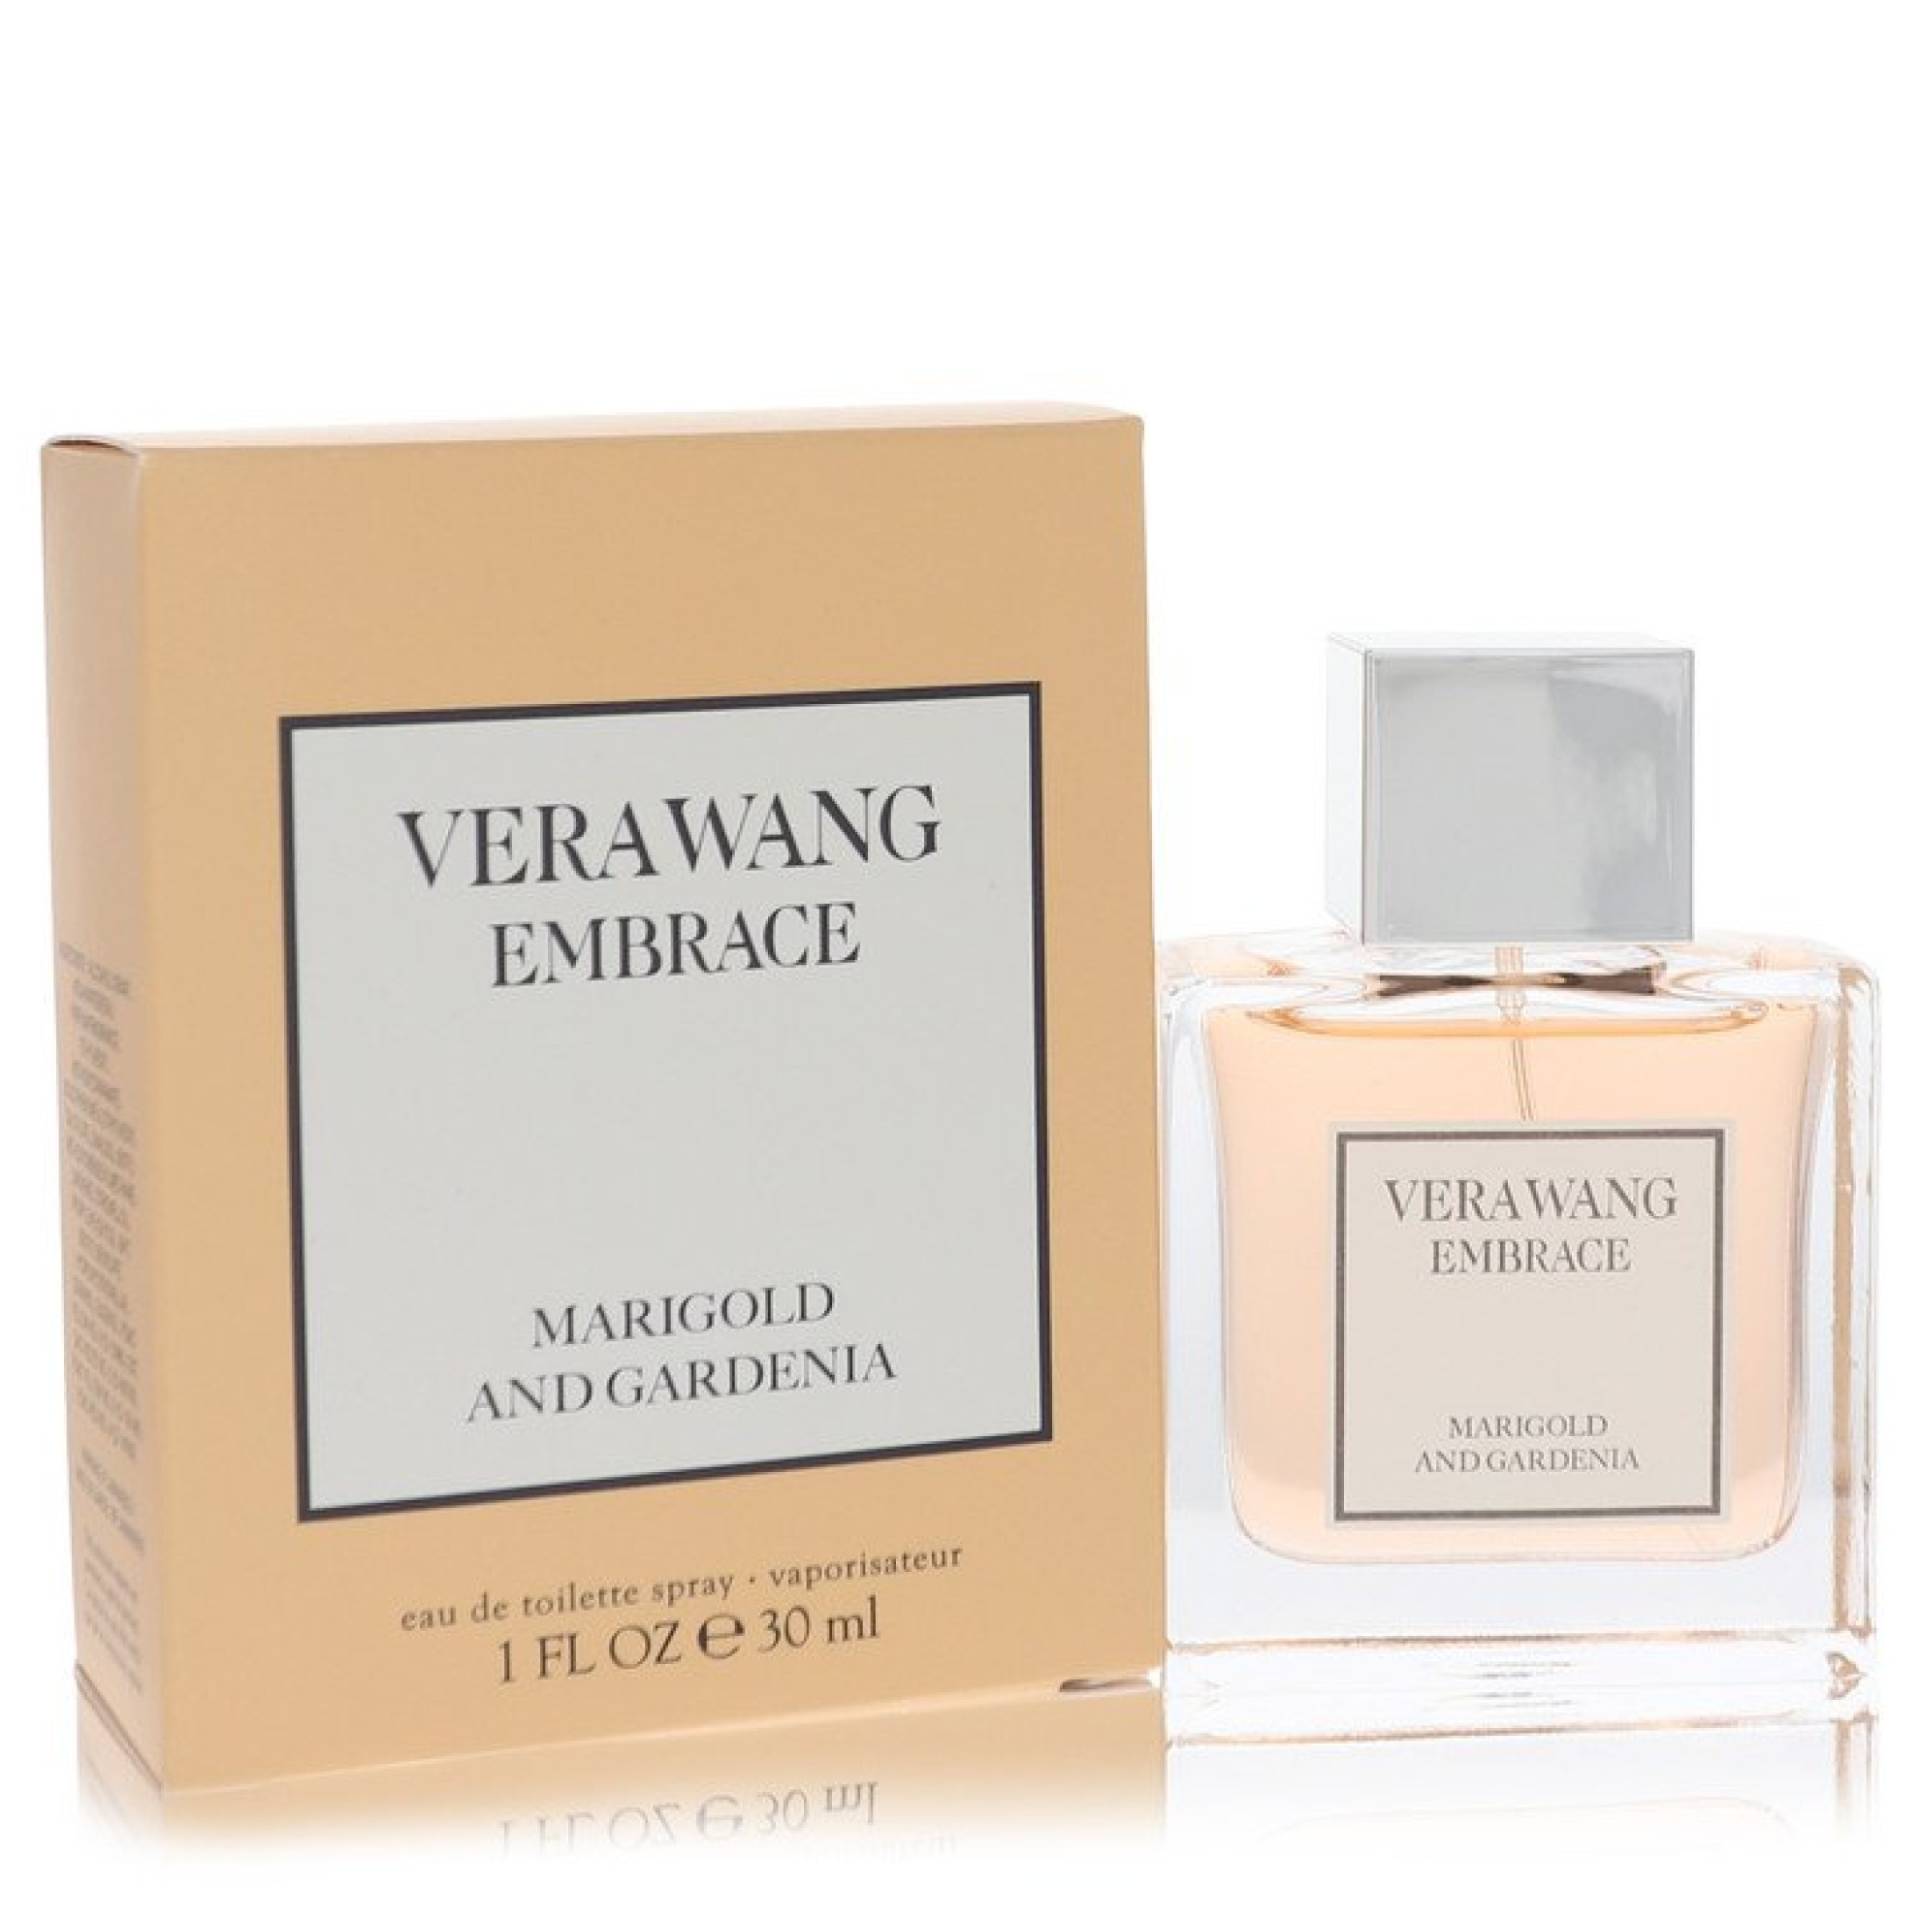 Vera Wang Embrace Marigold and Gardenia Eau De Toilette Spray 30 ml von Vera Wang